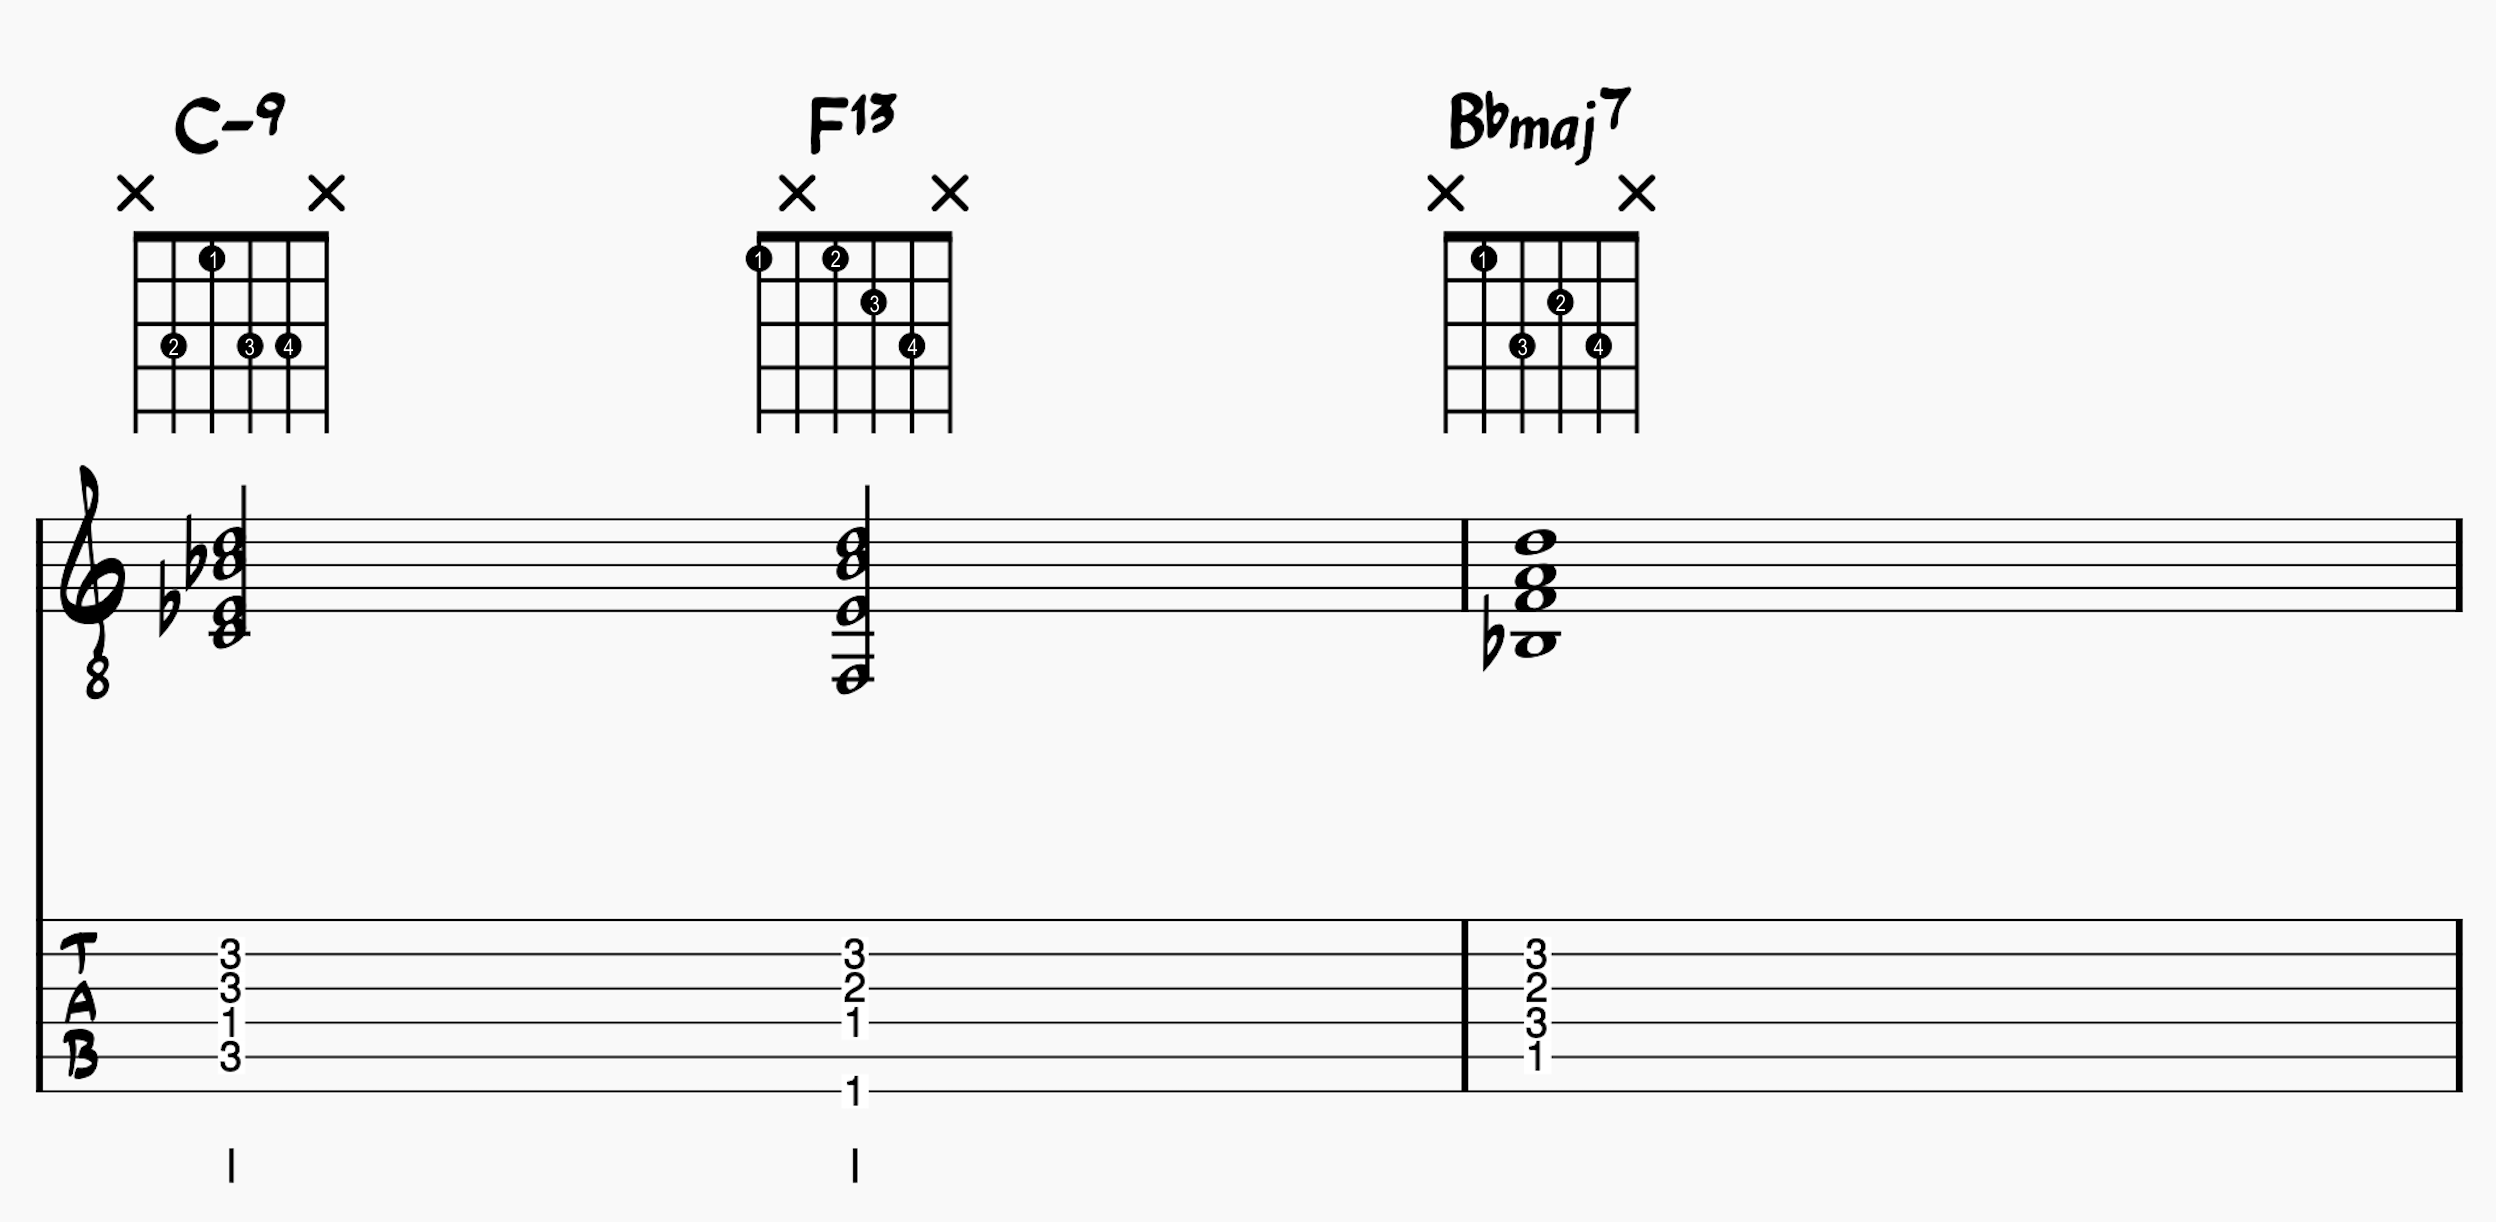 C-9 | F13 | Bbmaj7 chord progression 